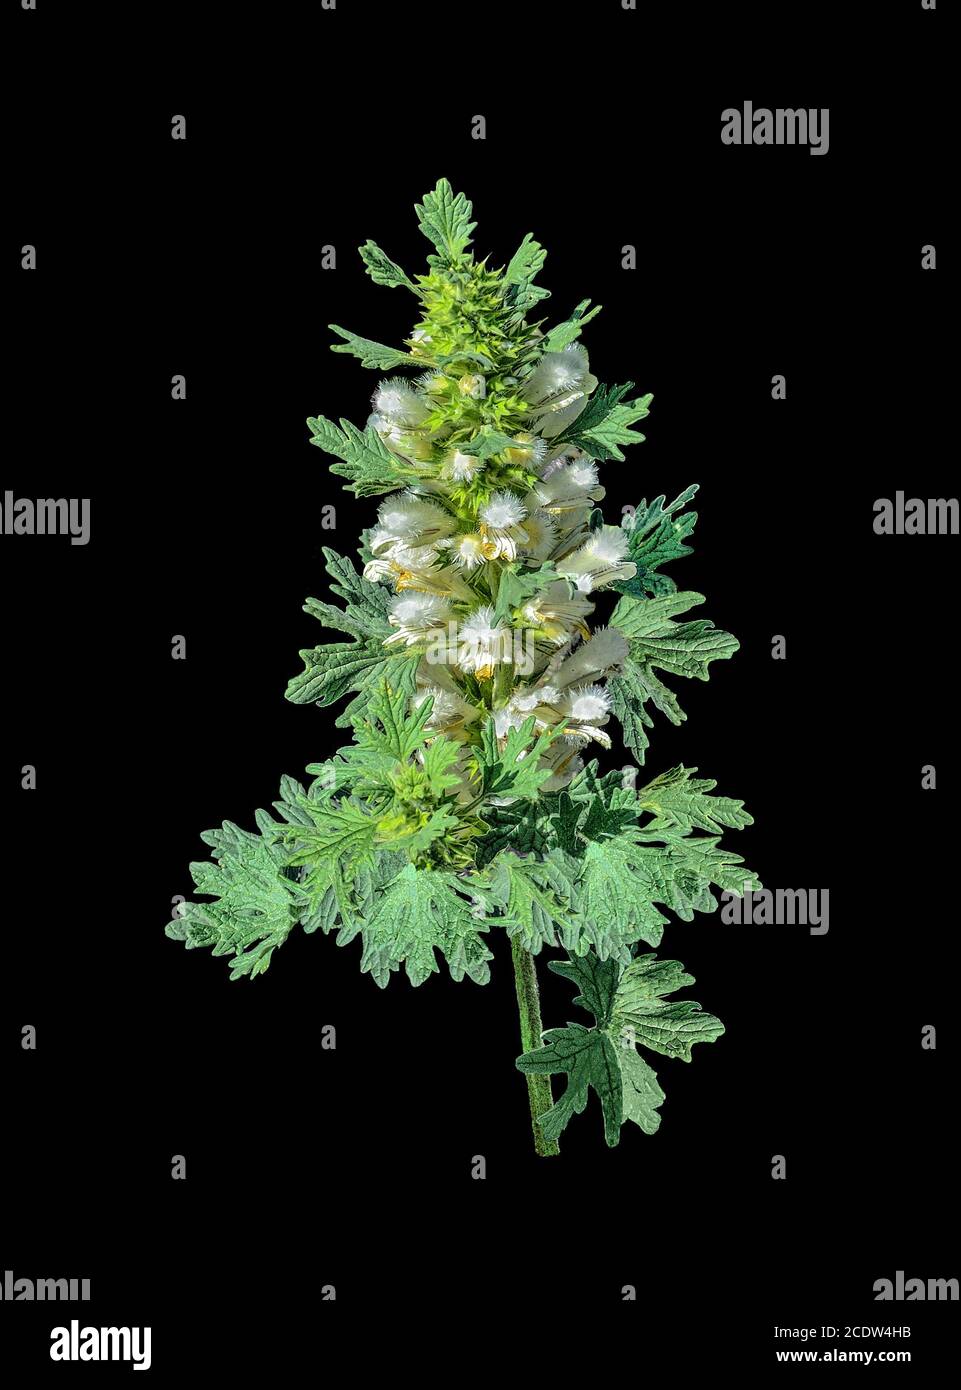 Blooming motherwort or Leonurus cardiaca on a black background isolated Stock Photo